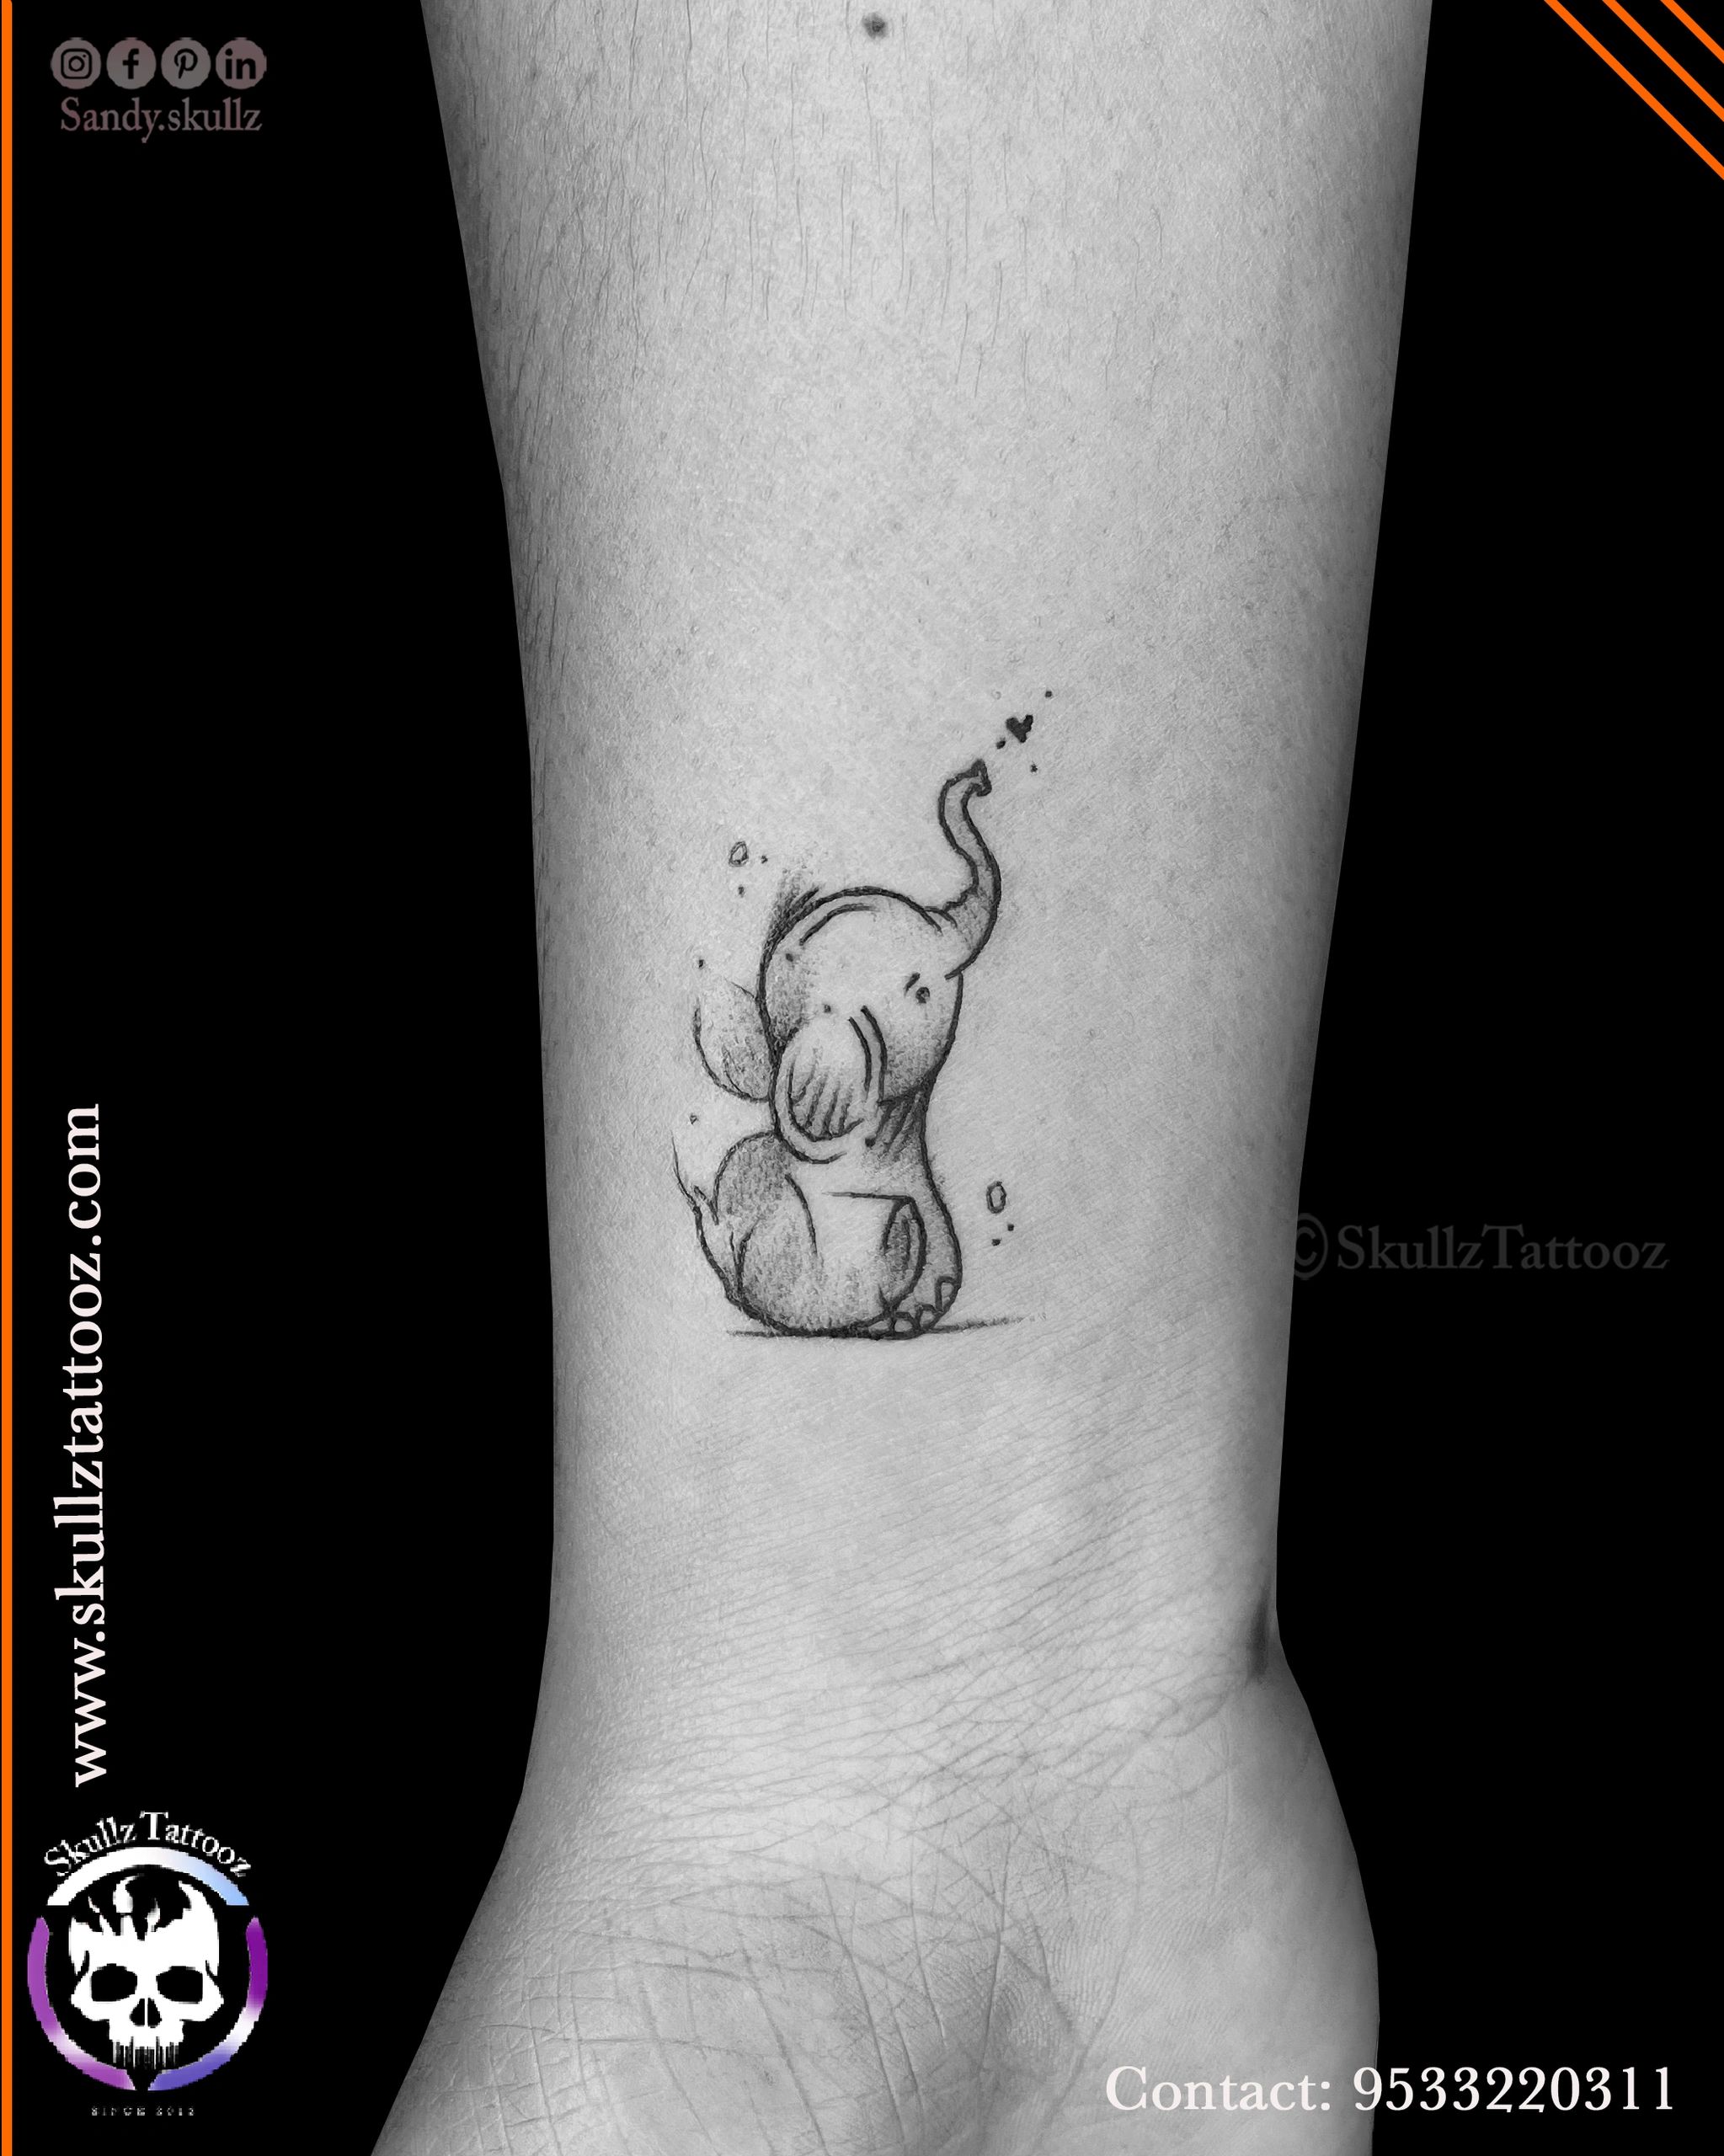 Buy Temporary Tattoo Sheet Mini Tattoo Trial Black Tattoo Flash Online in  India  Etsy